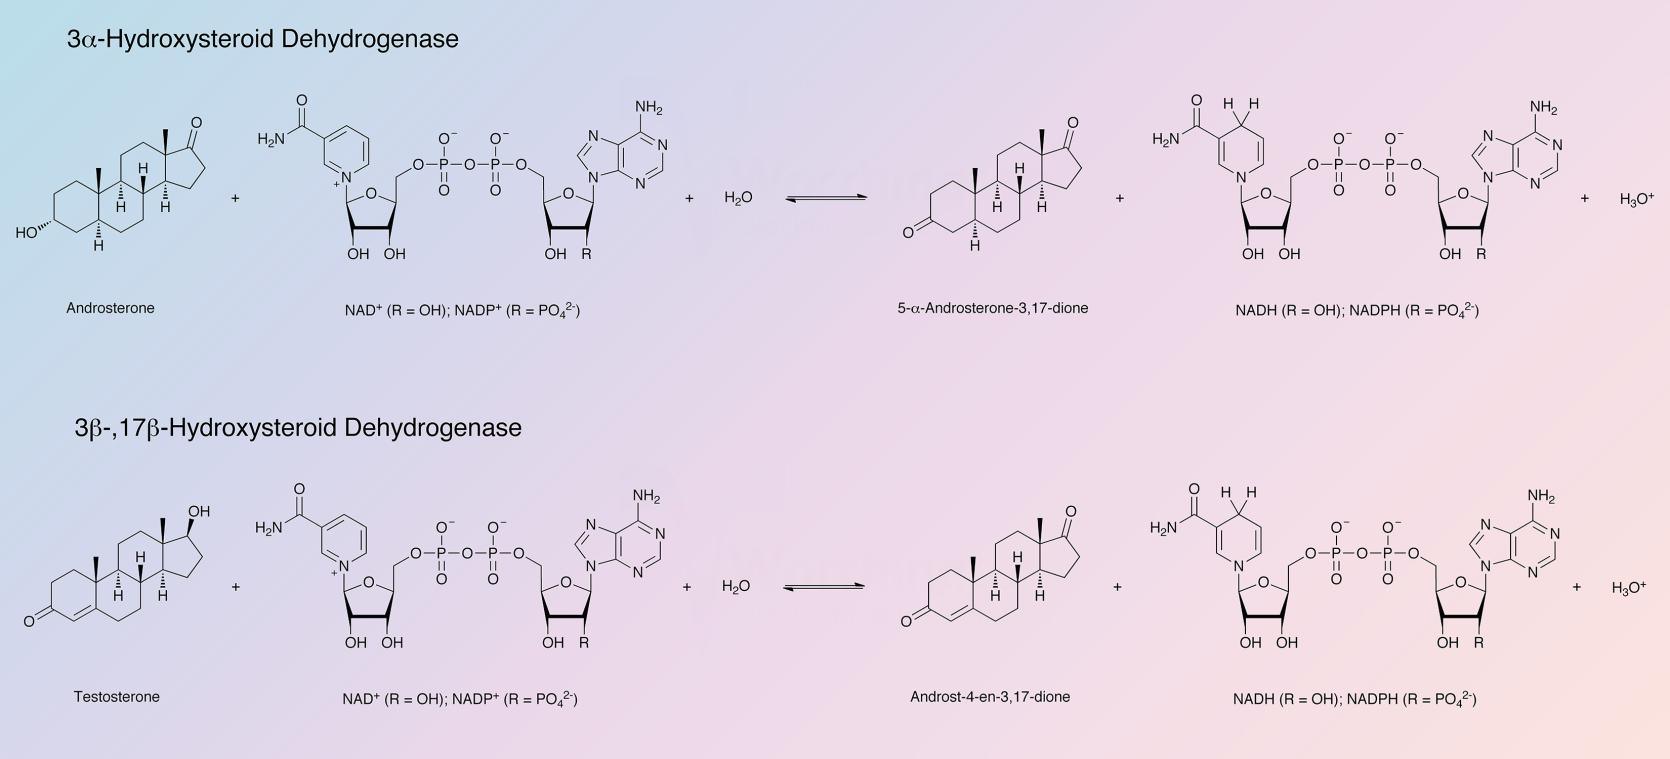 Hydroxysteroid Dehydrogenase Enzymatic Reaction